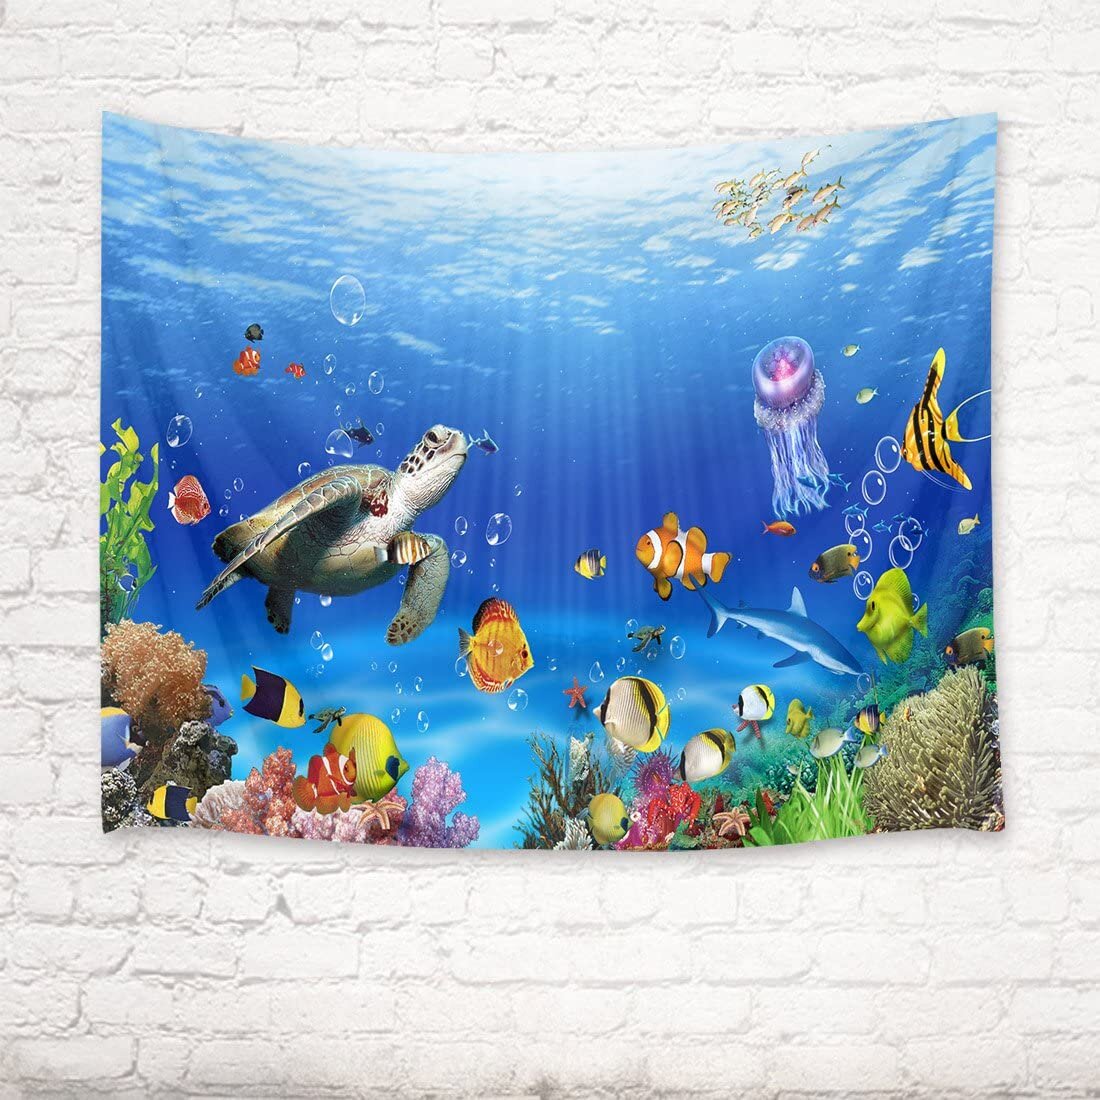 Ocean Animals Tapestry Wall Hanging Bedroom Living Room Dorm Decor Blanket 